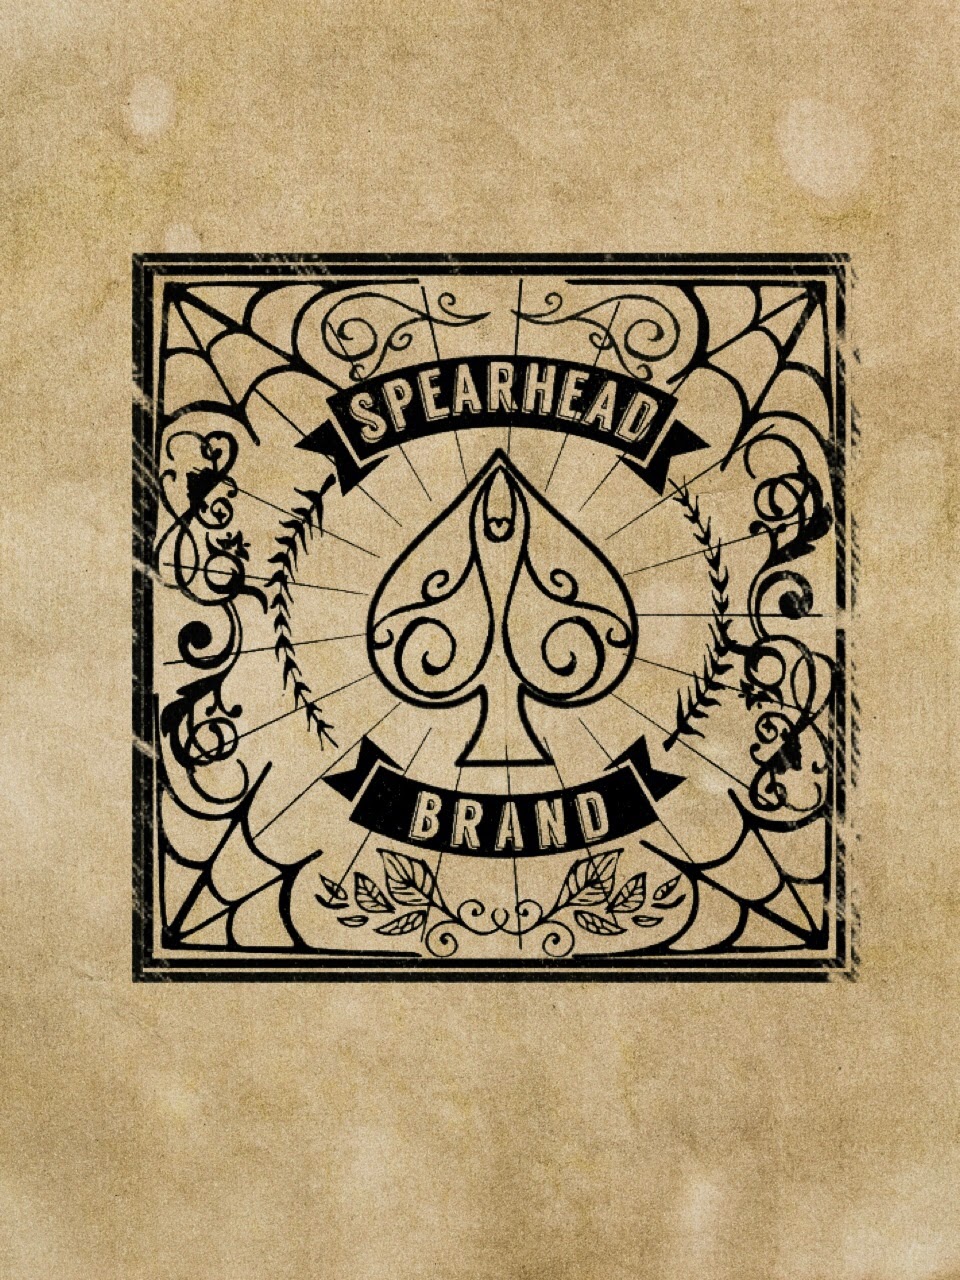 Spearhead brand